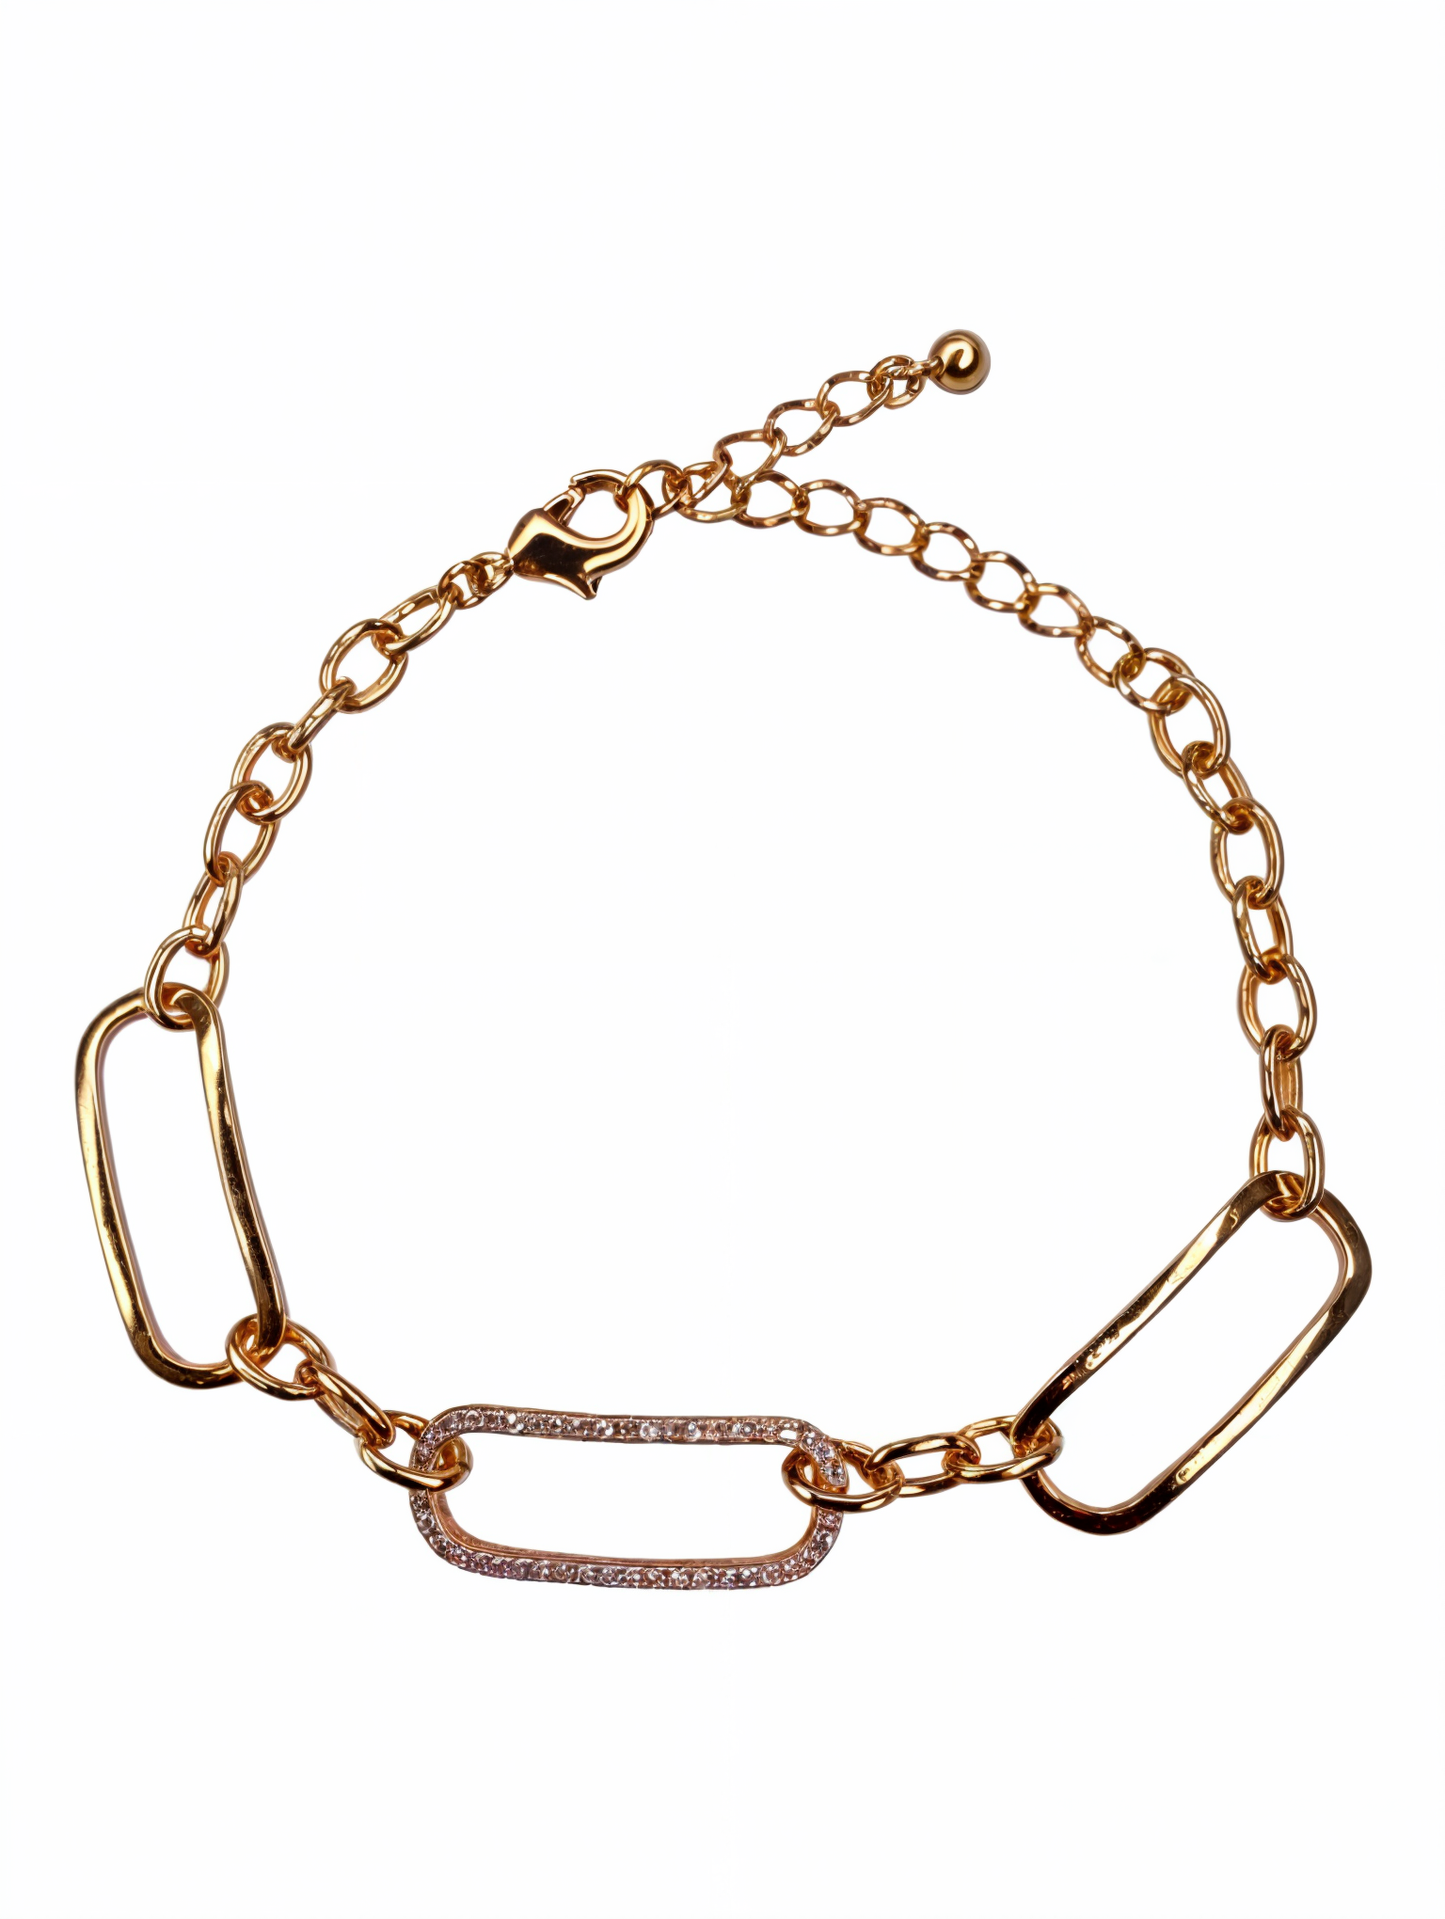 Vintage Golden Plated Link Chain Bracelet with CZ